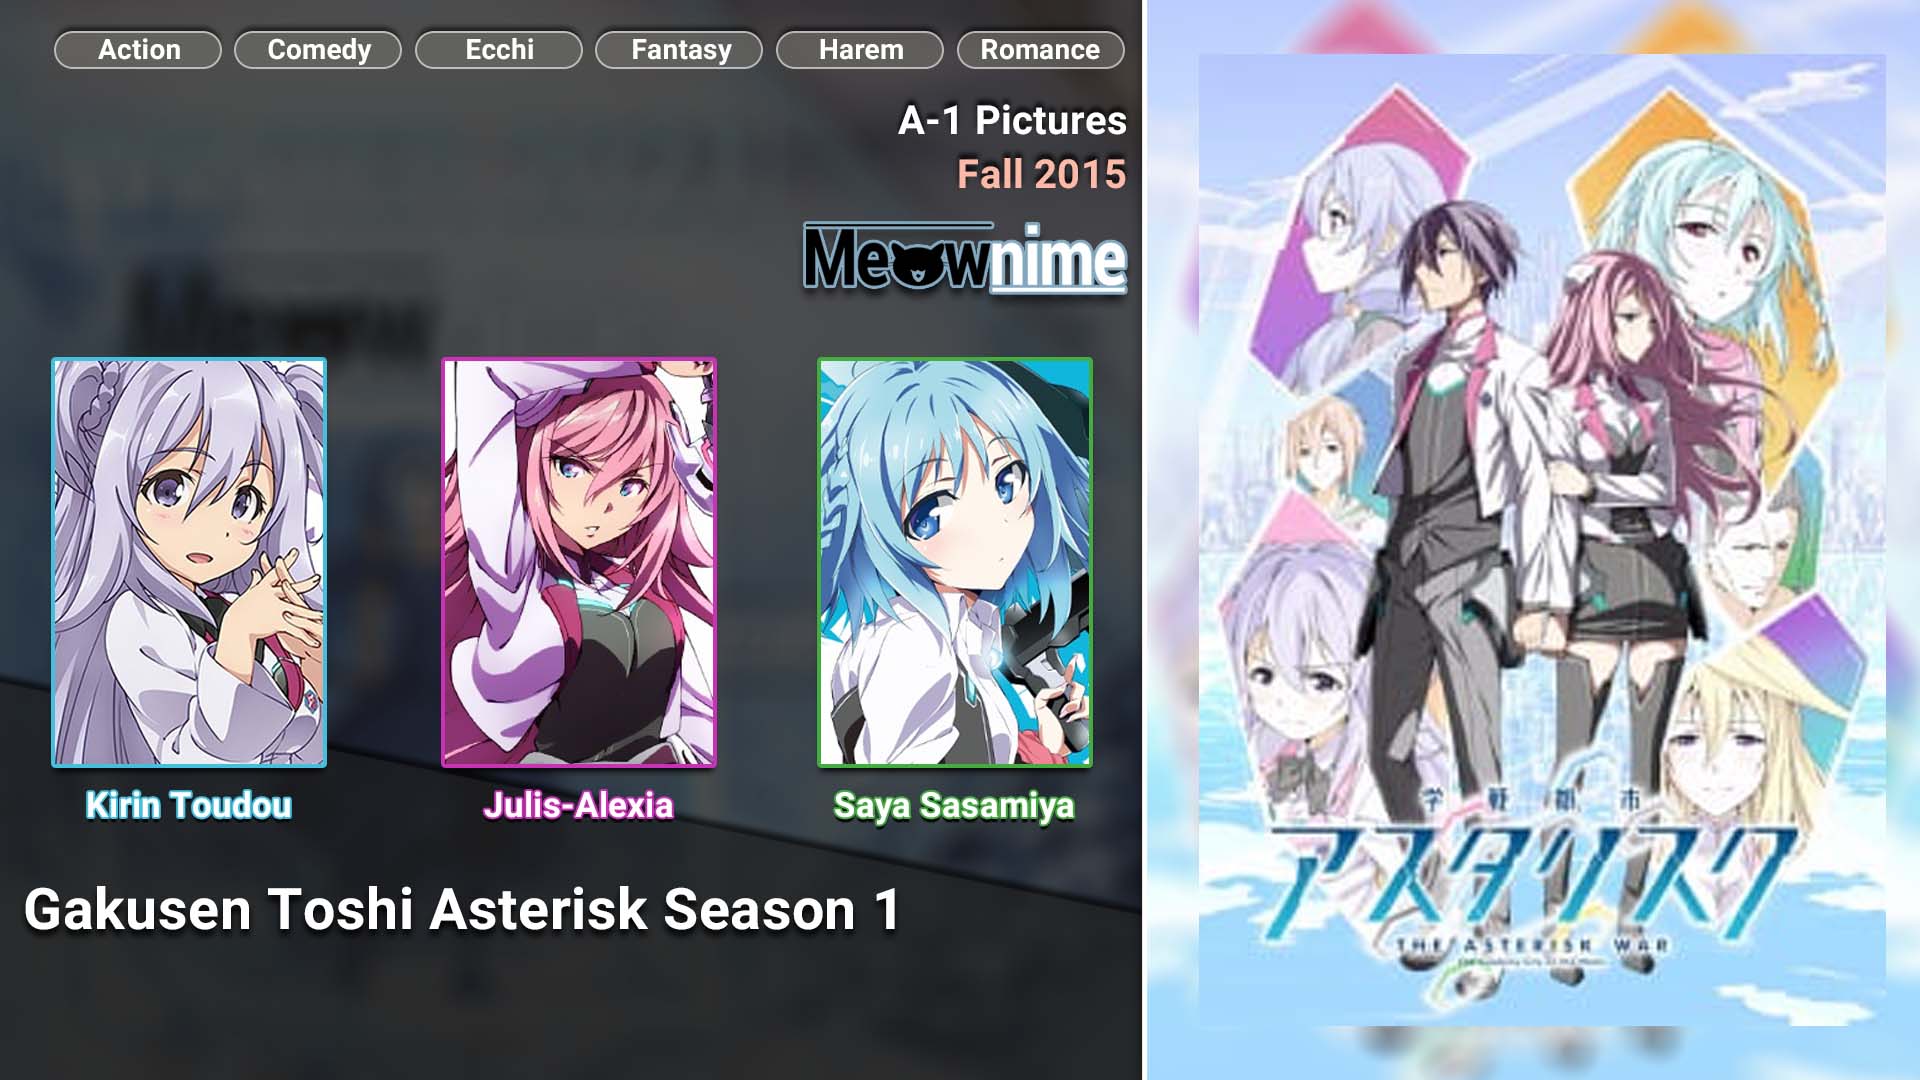 Gakusen Toshi Asterisk Season 1